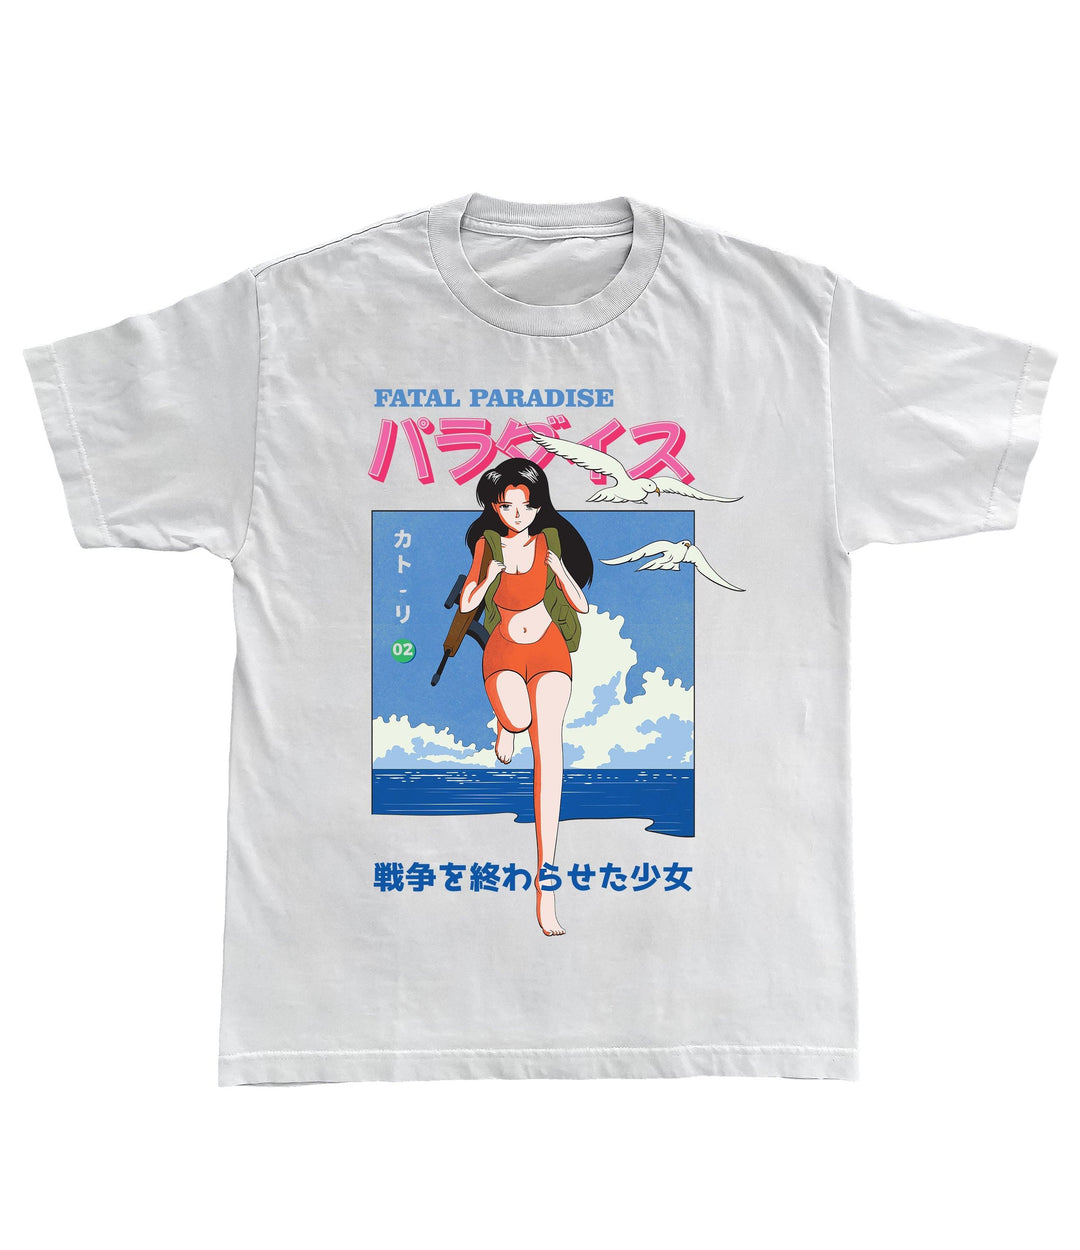 FATAL PARADISE TEE at Catori Clothing | Graphic & Anime Tees, Hoodies & Sweatshirts 